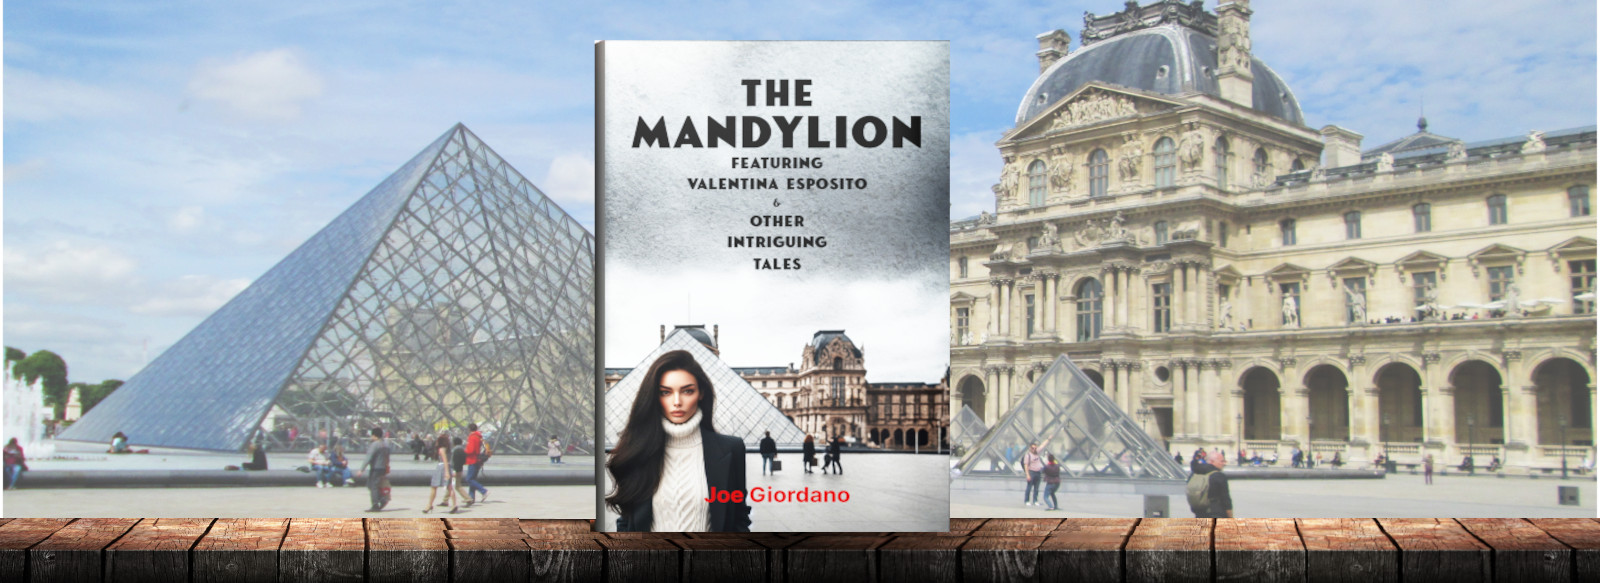 The Mandylion featuring Valentina Esposito by Joe Giordano